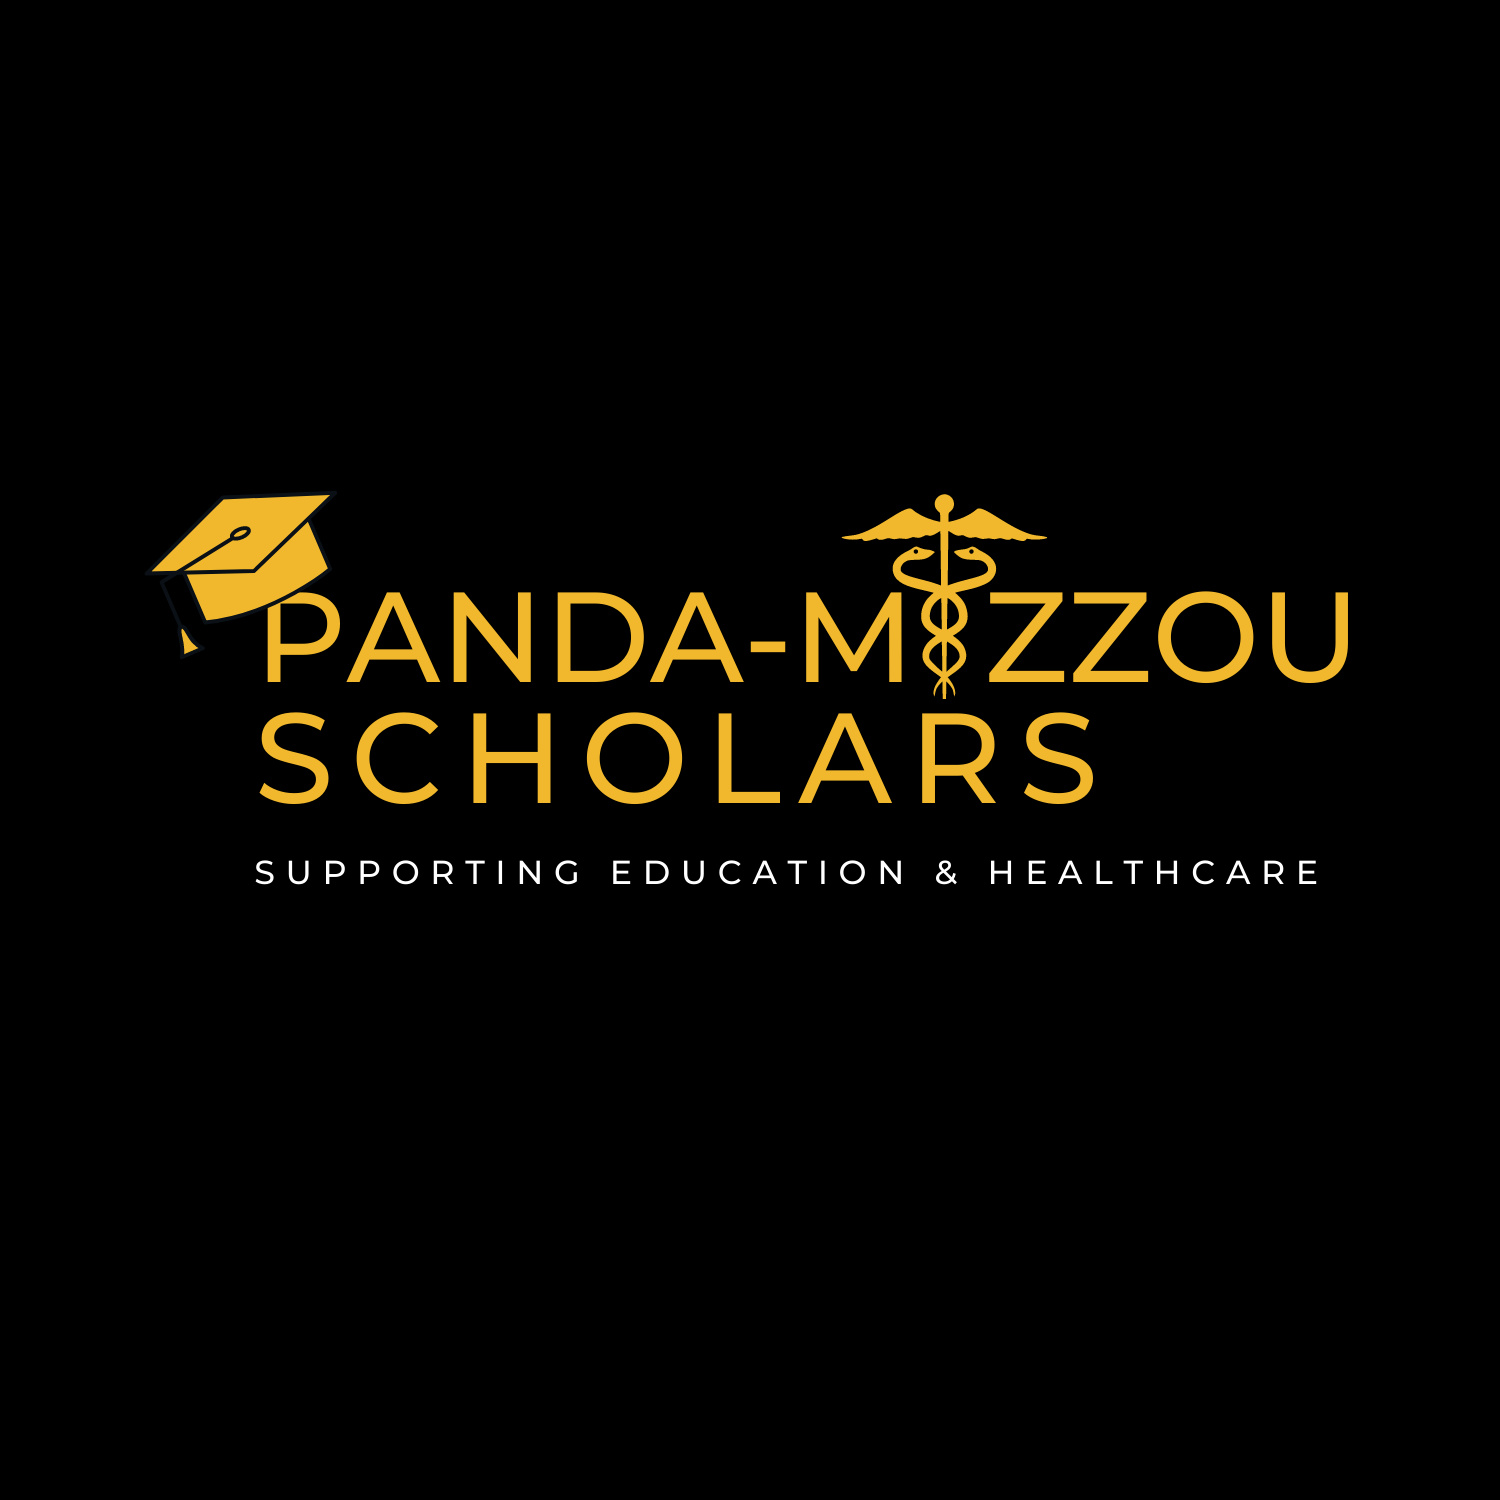 Panda-Mizzou Scholars